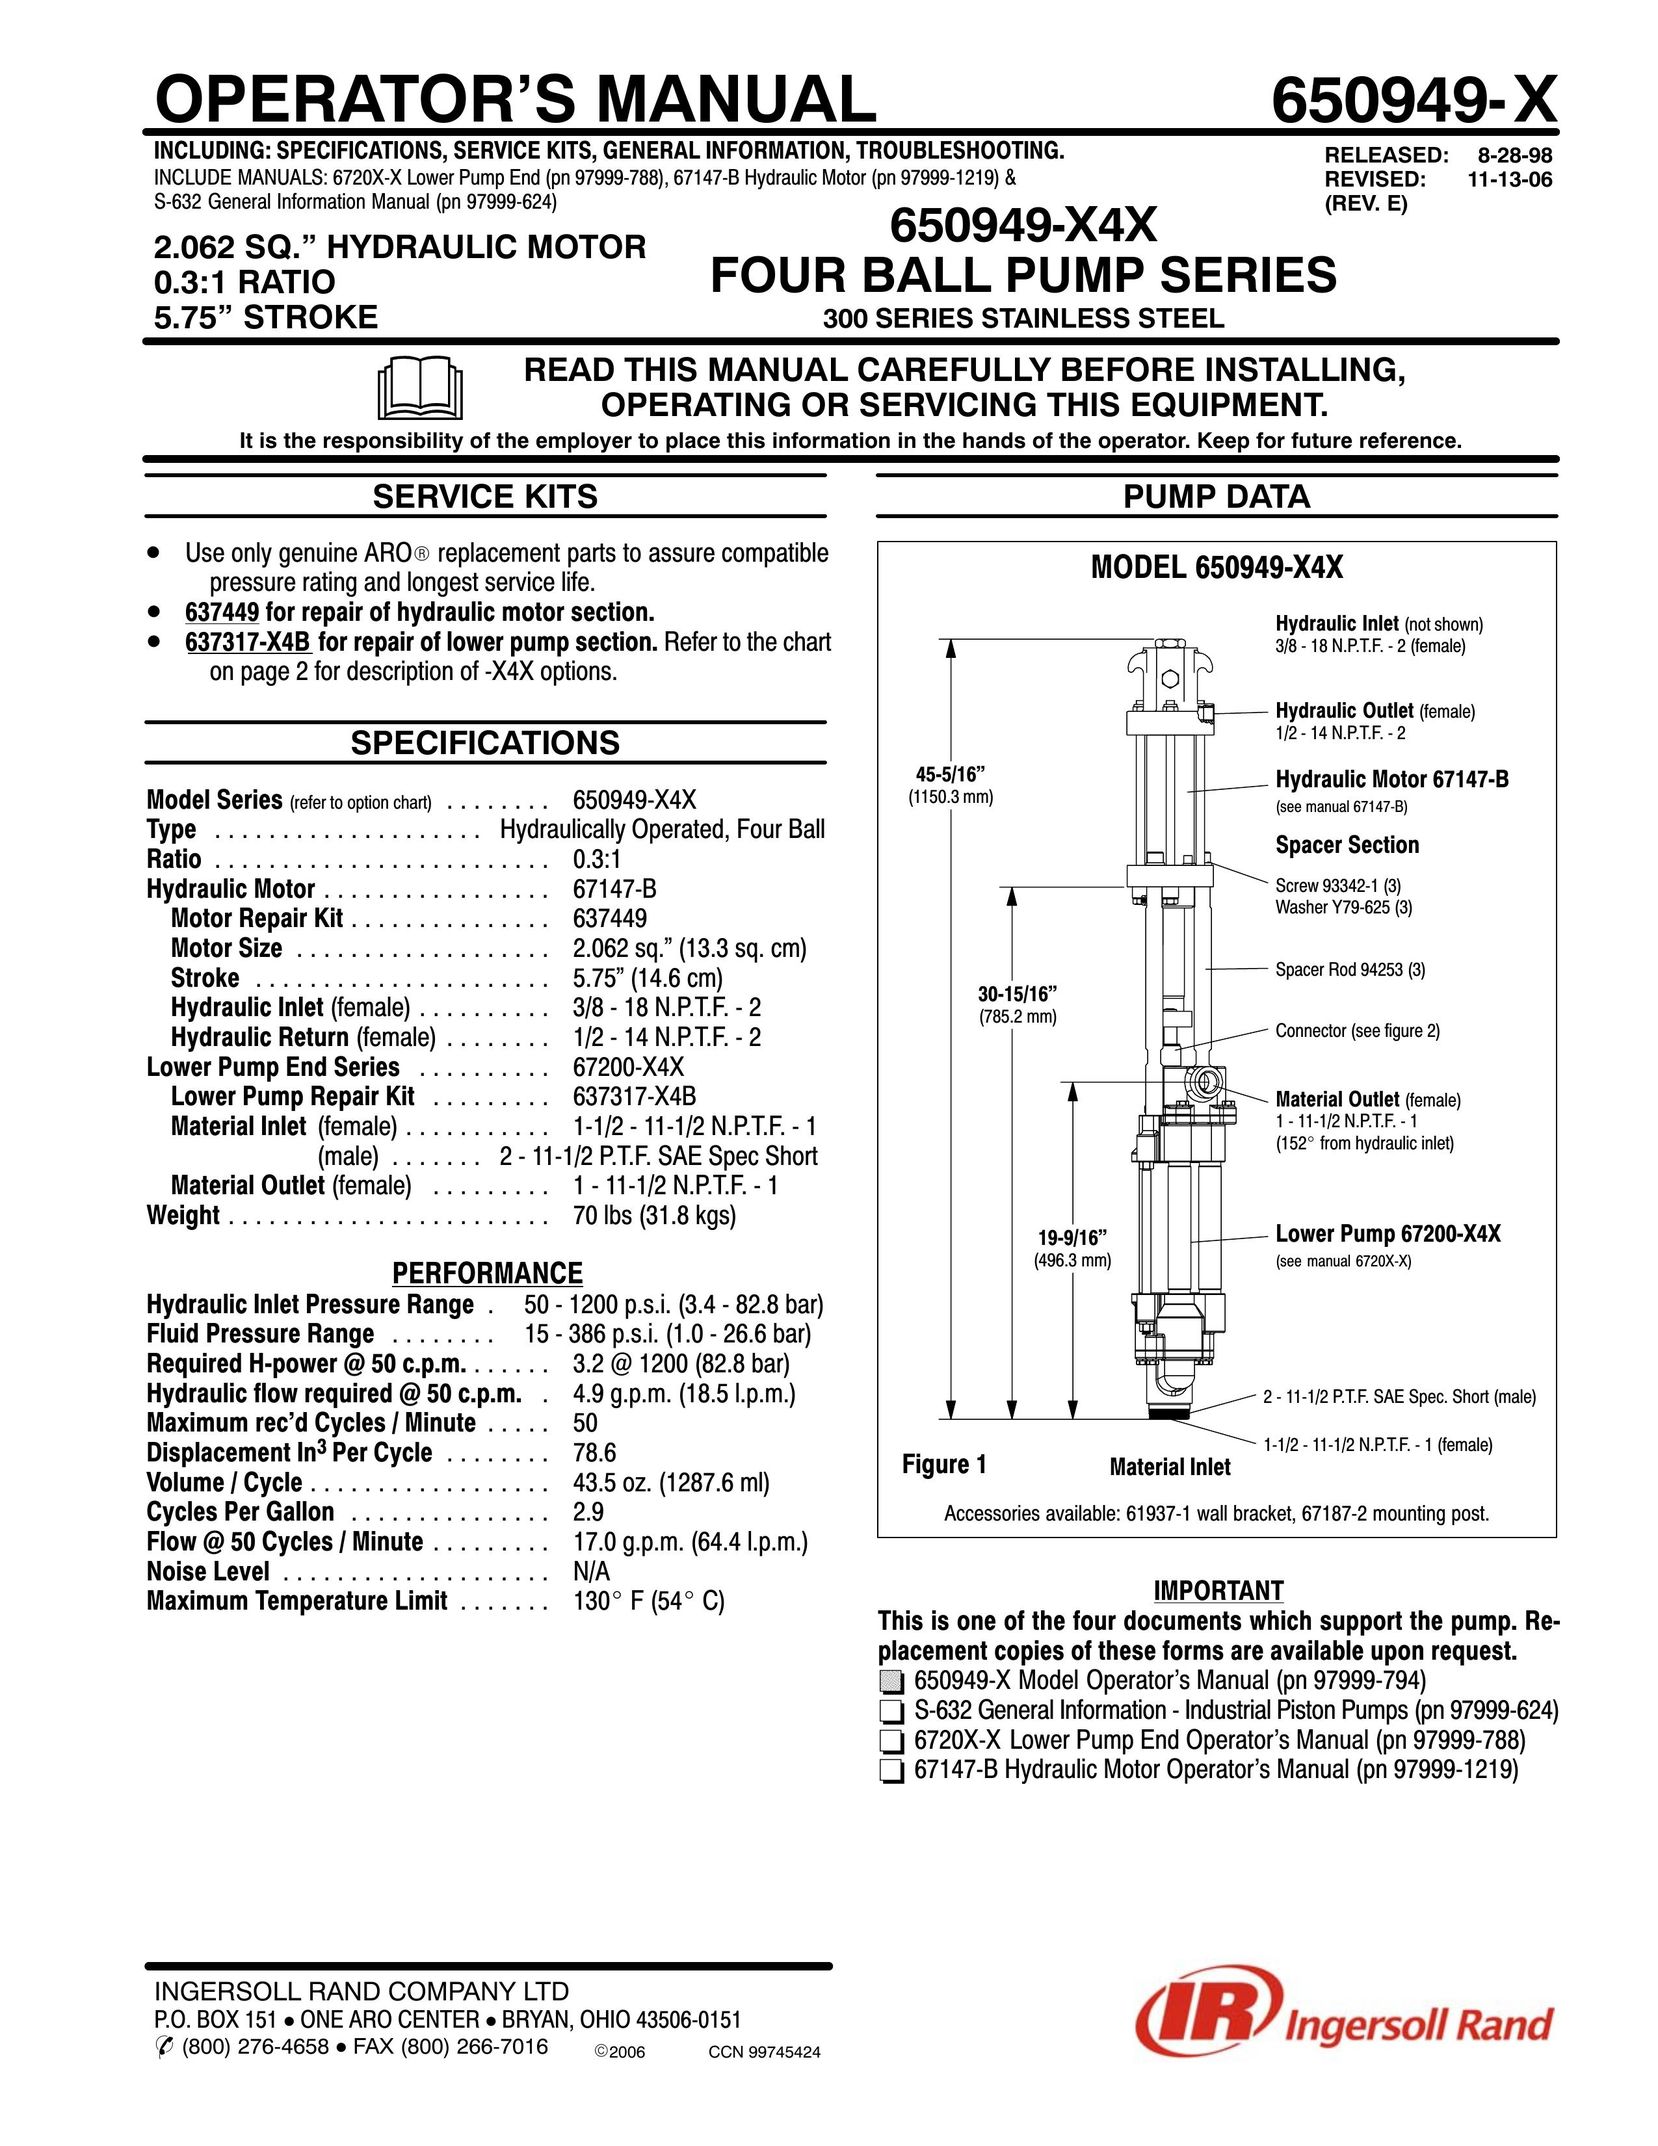 Ingersoll-Rand 650949-X Water Pump User Manual